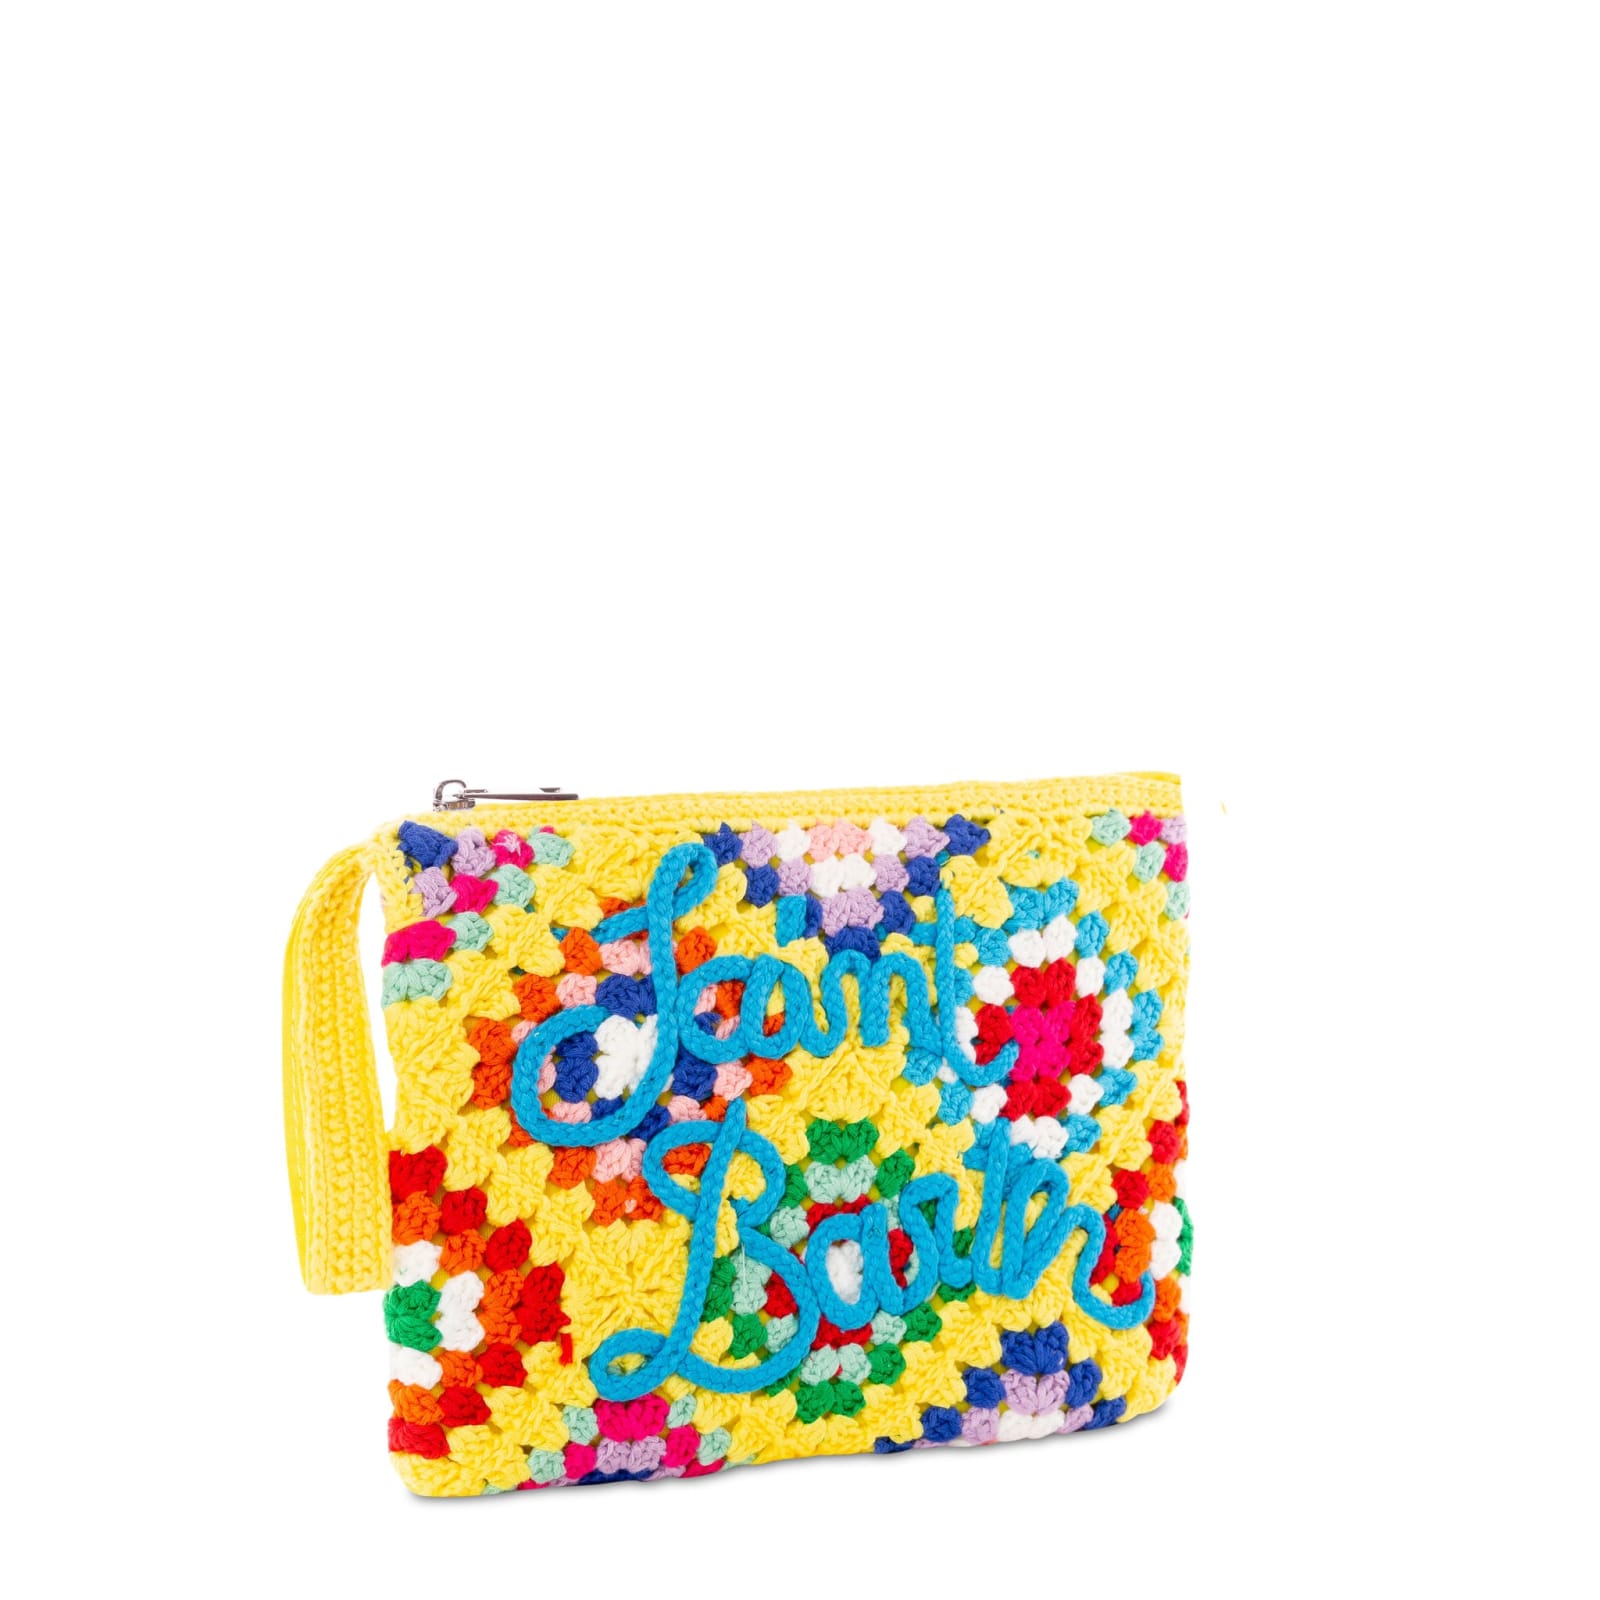 Shop Mc2 Saint Barth Parisienne Yellow Crochet Pouch Bag With Saint Barth Embroidery